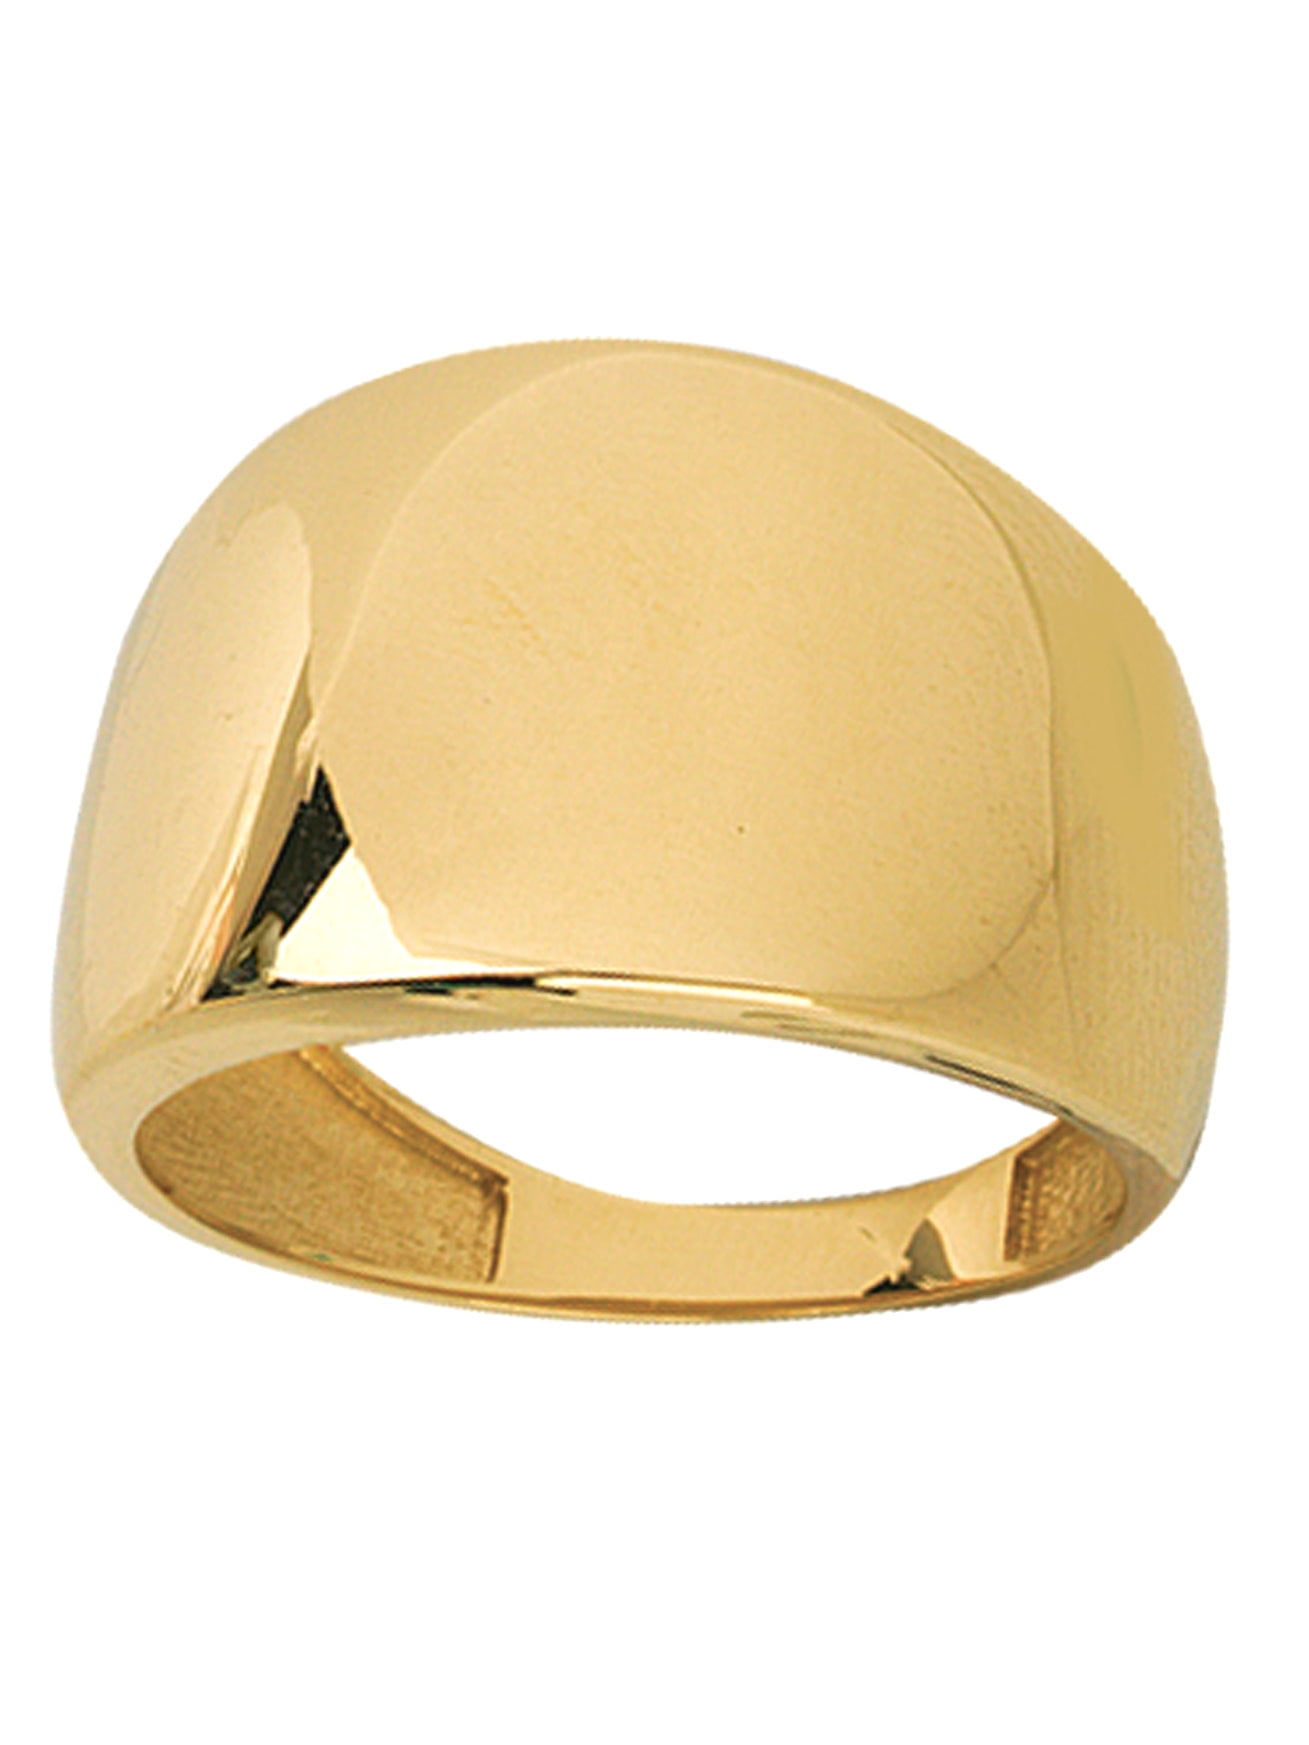 AzureBella Jewelry 14k Yellow Gold Cigar Band Ring  